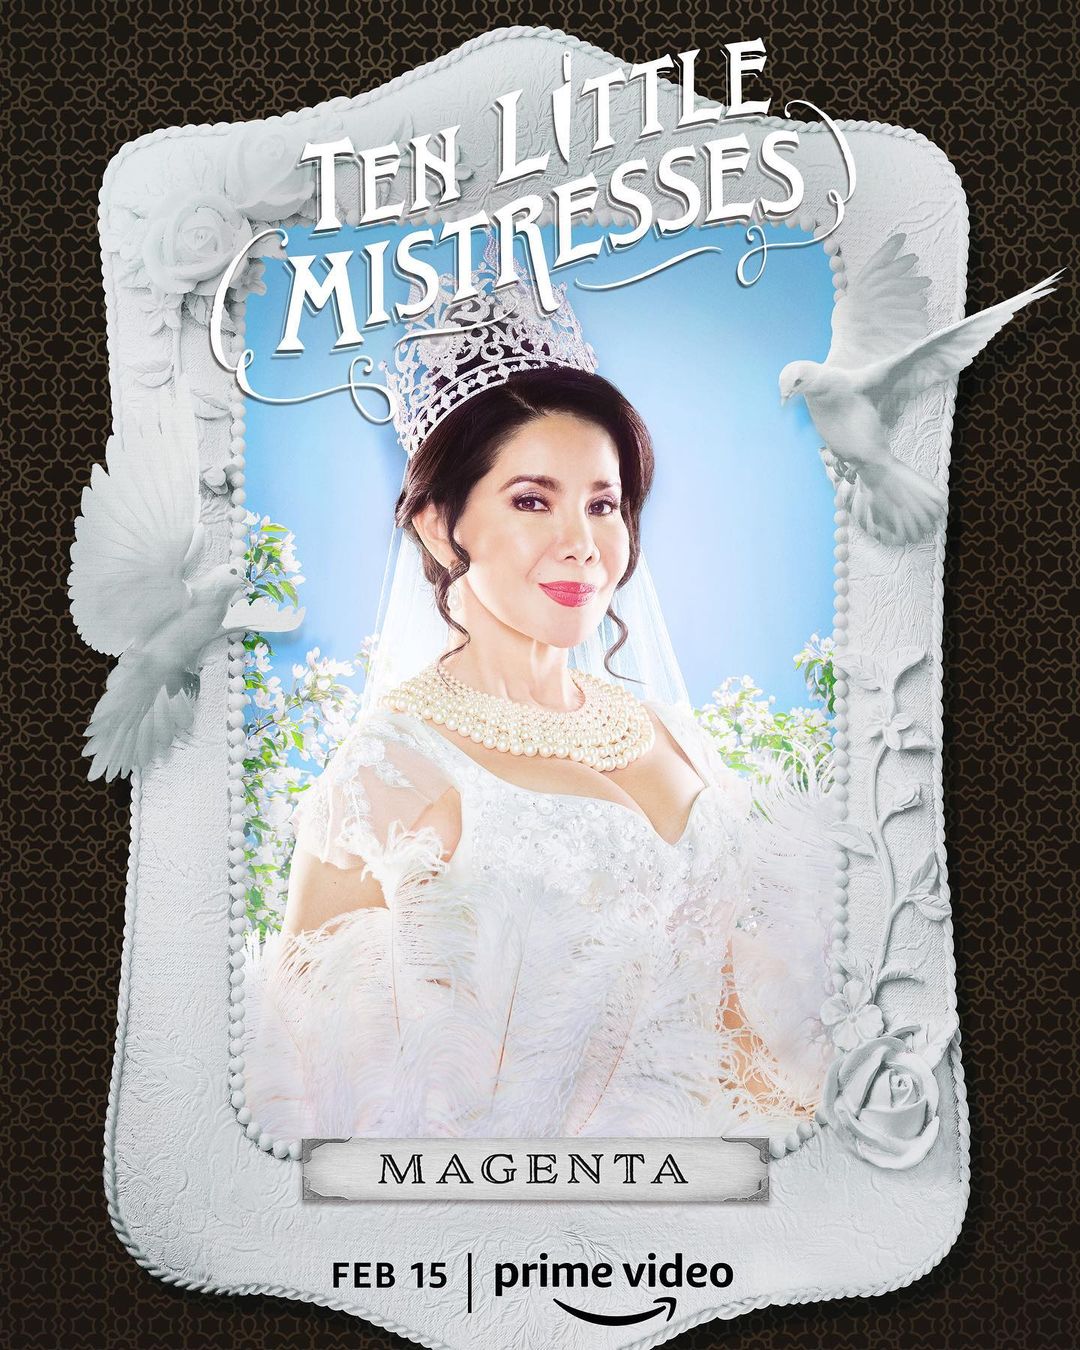 Ten Little Mistresses : Carmi Martin as Magenta